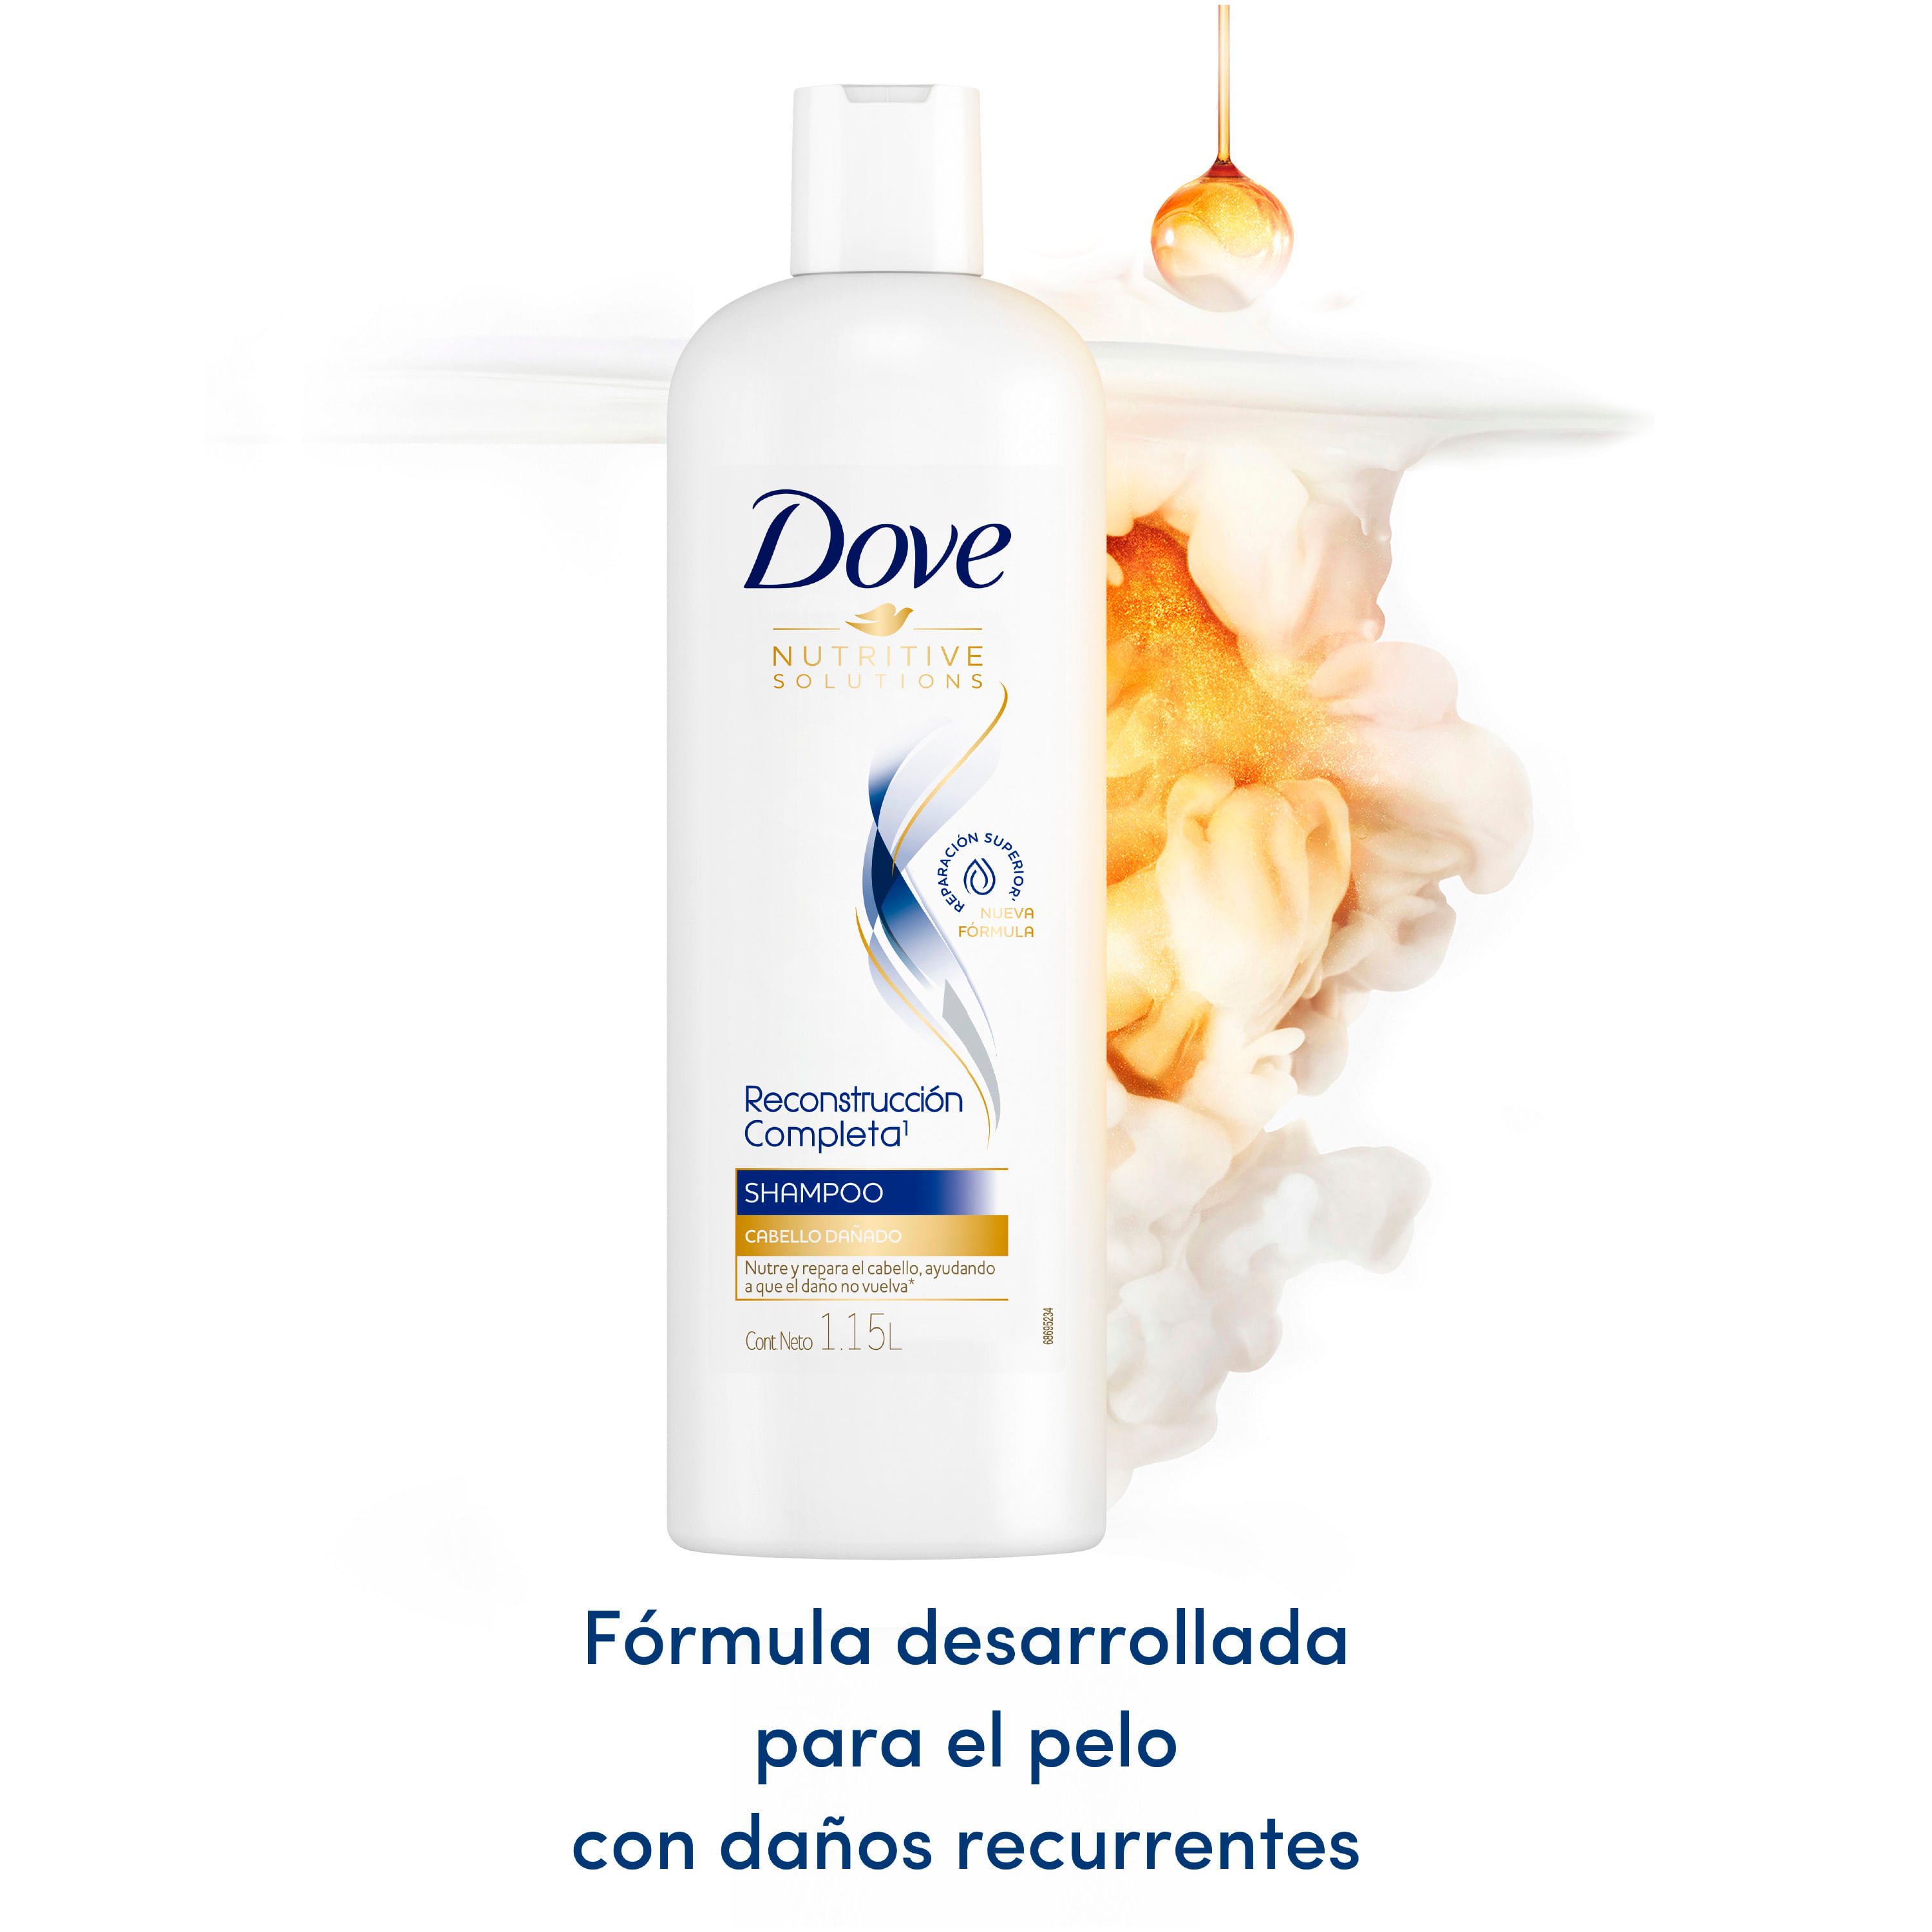 Compra Dove Care By Nature Glowing Shower Gel 400ml · El Salvador